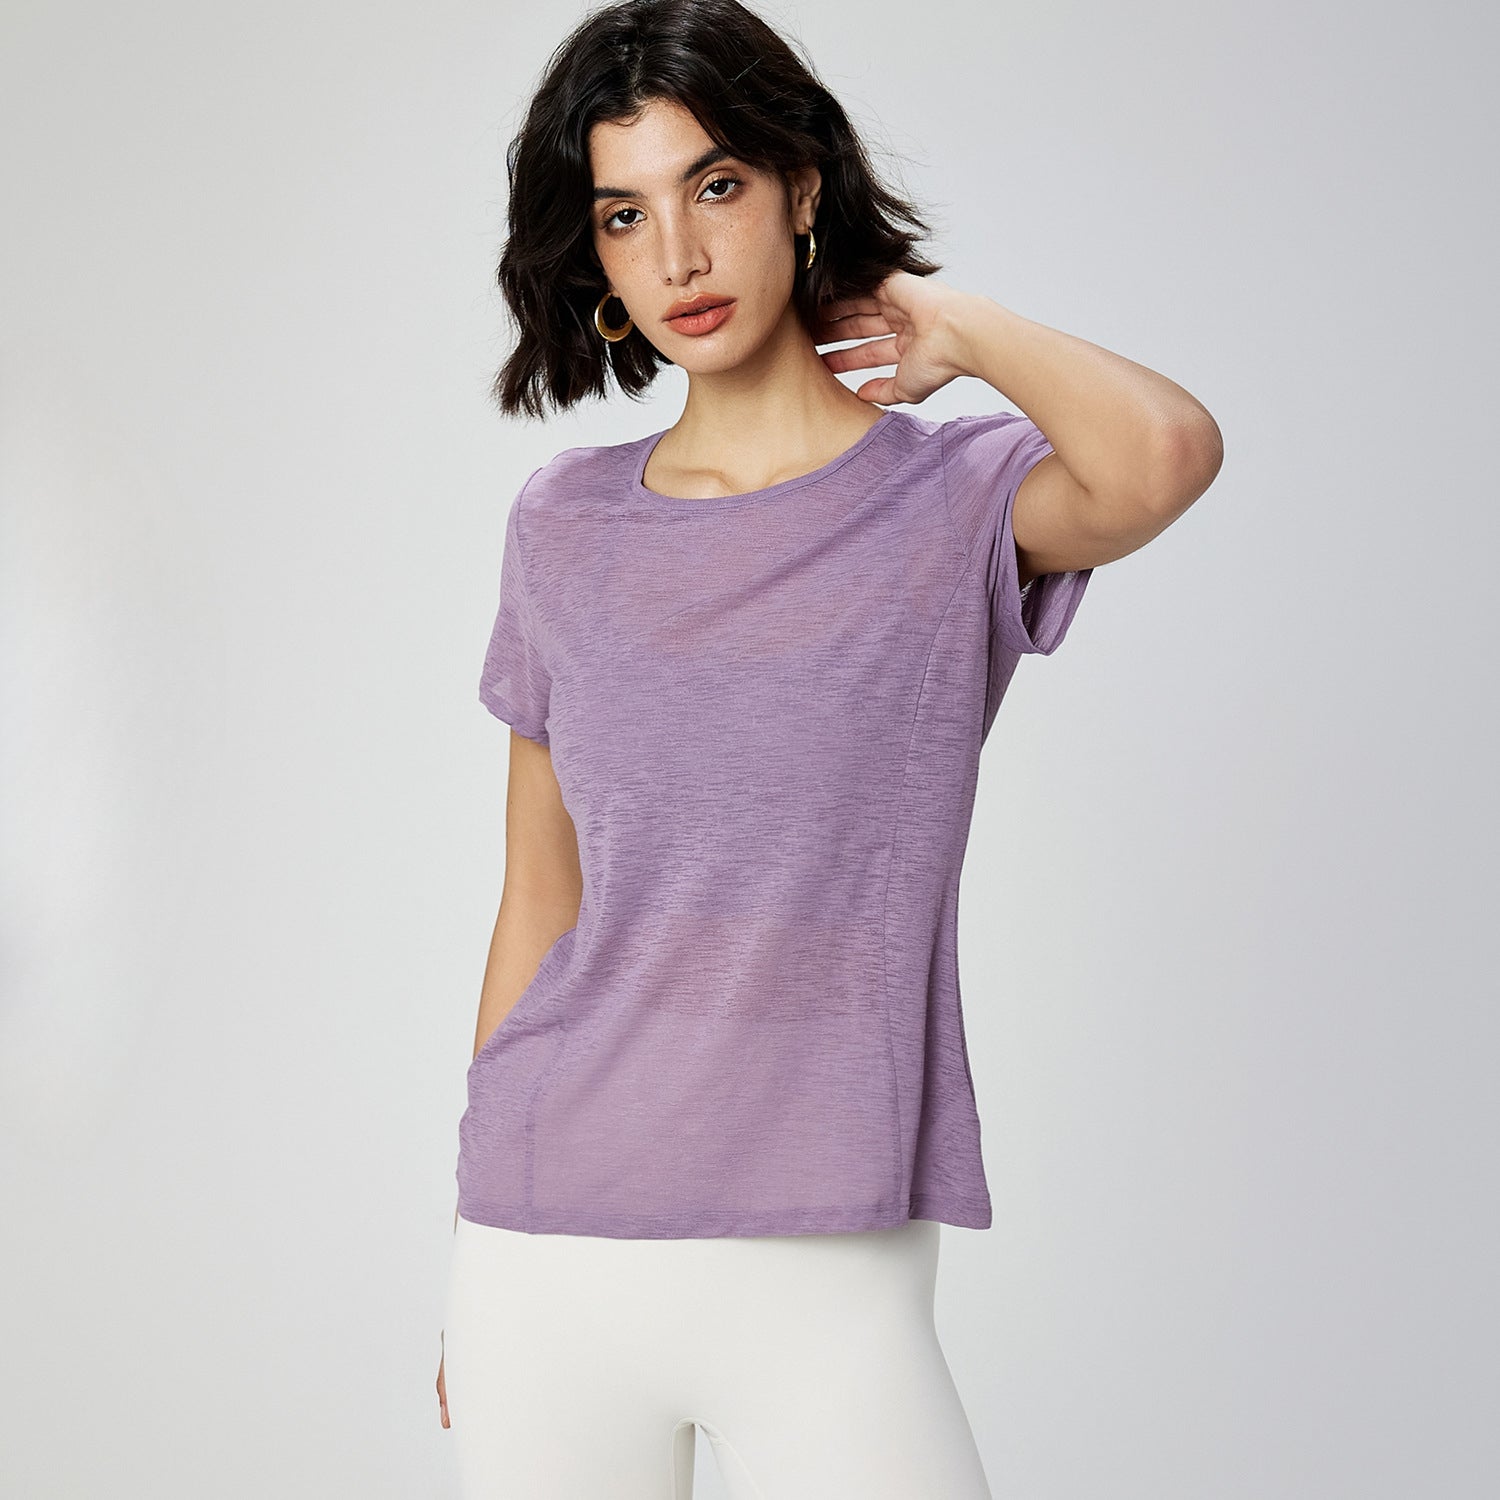 Yarn Yoga Blouse Thin Mesh Breathable High-grade Backless Cross Sports Shirt Short-sleeved Women